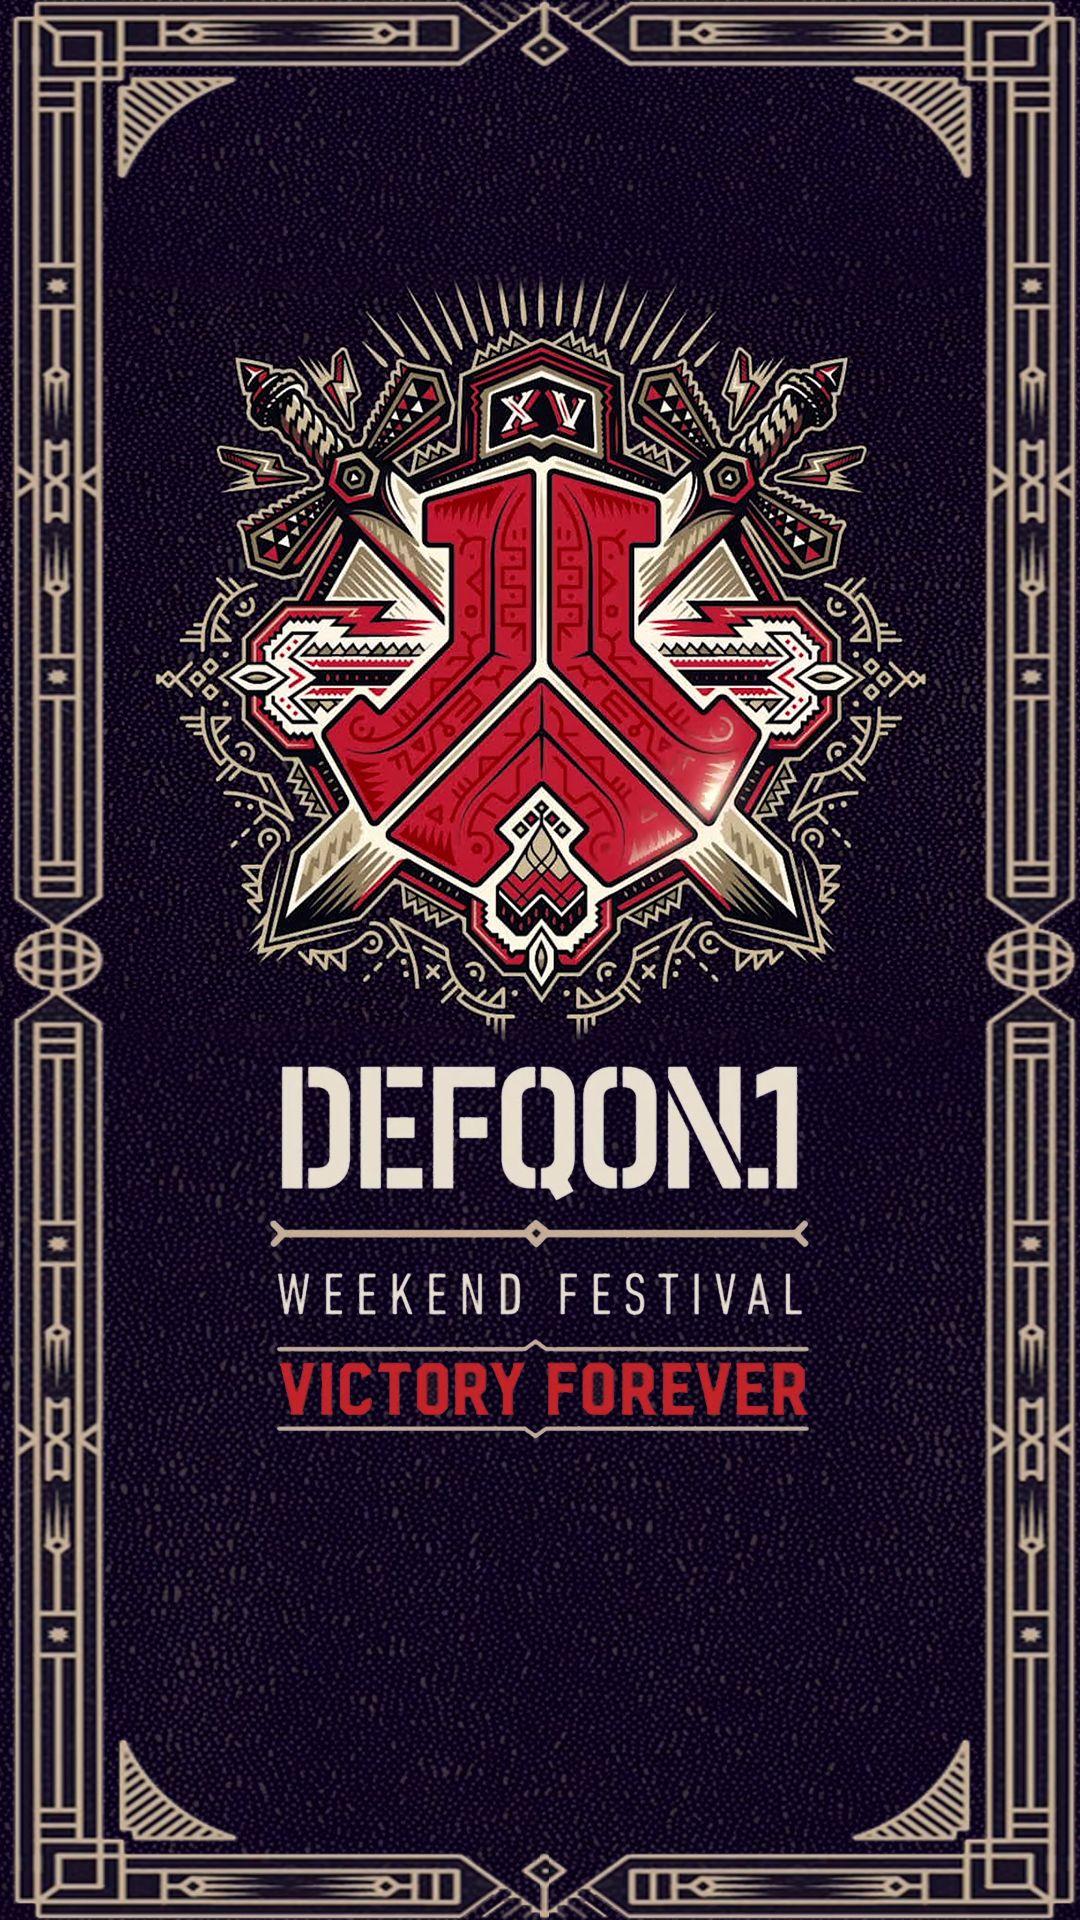 Defqon 1 Weekend Festival 2017 Background